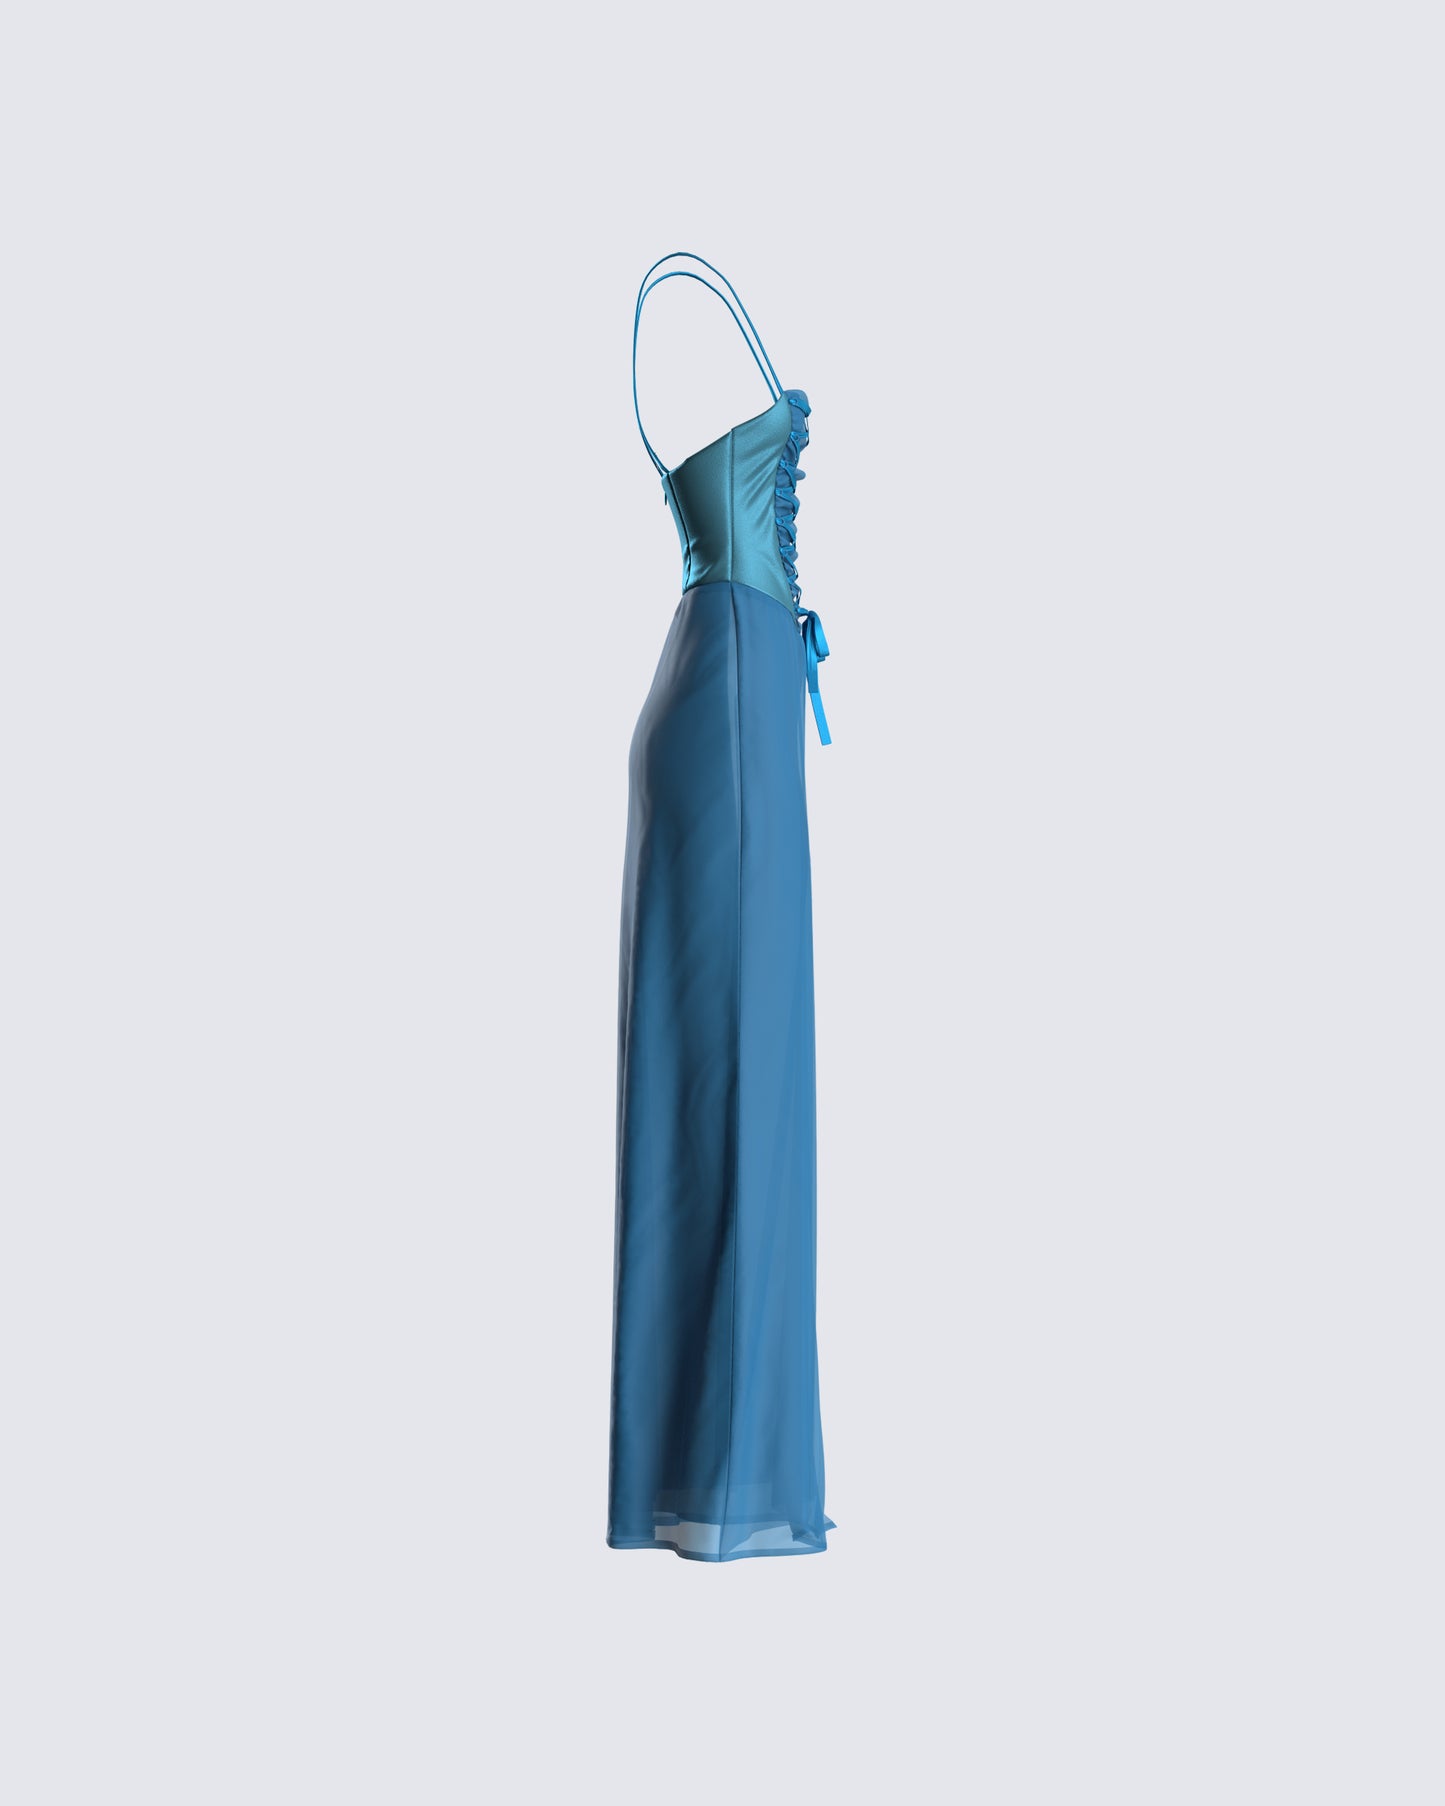 Tasma Teal Lace Bustier Dress